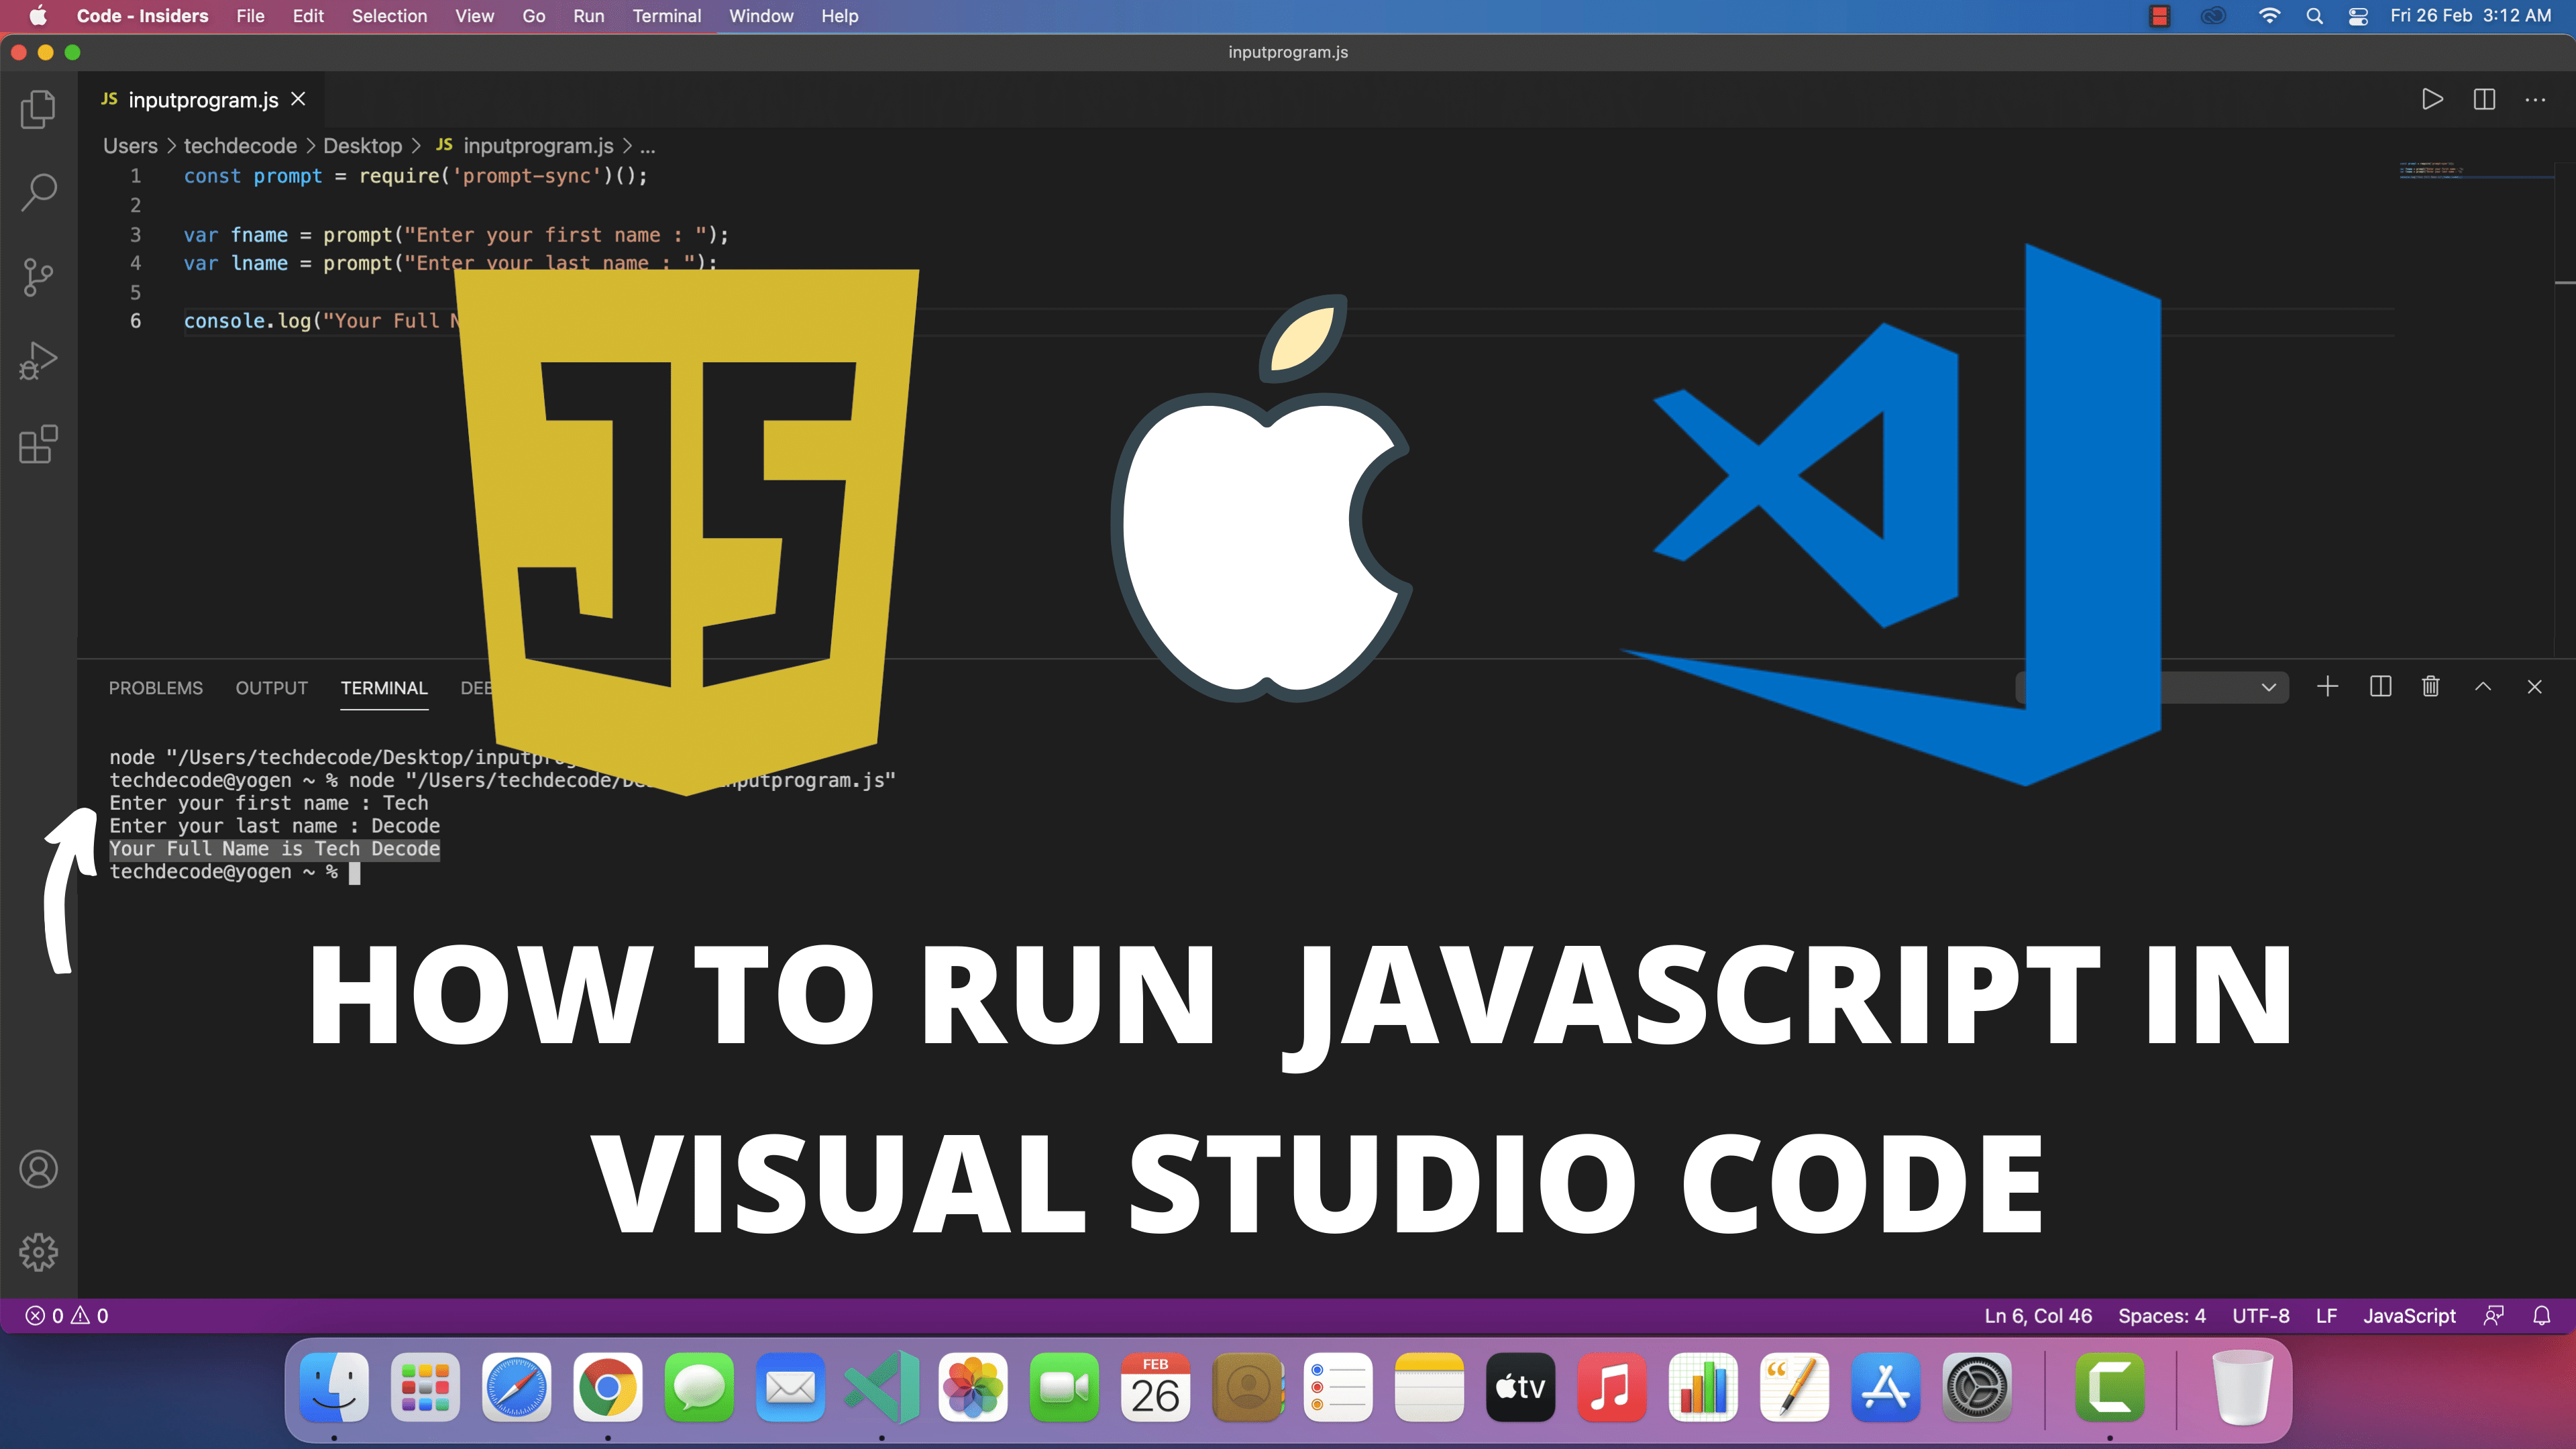 mac for development visual studio